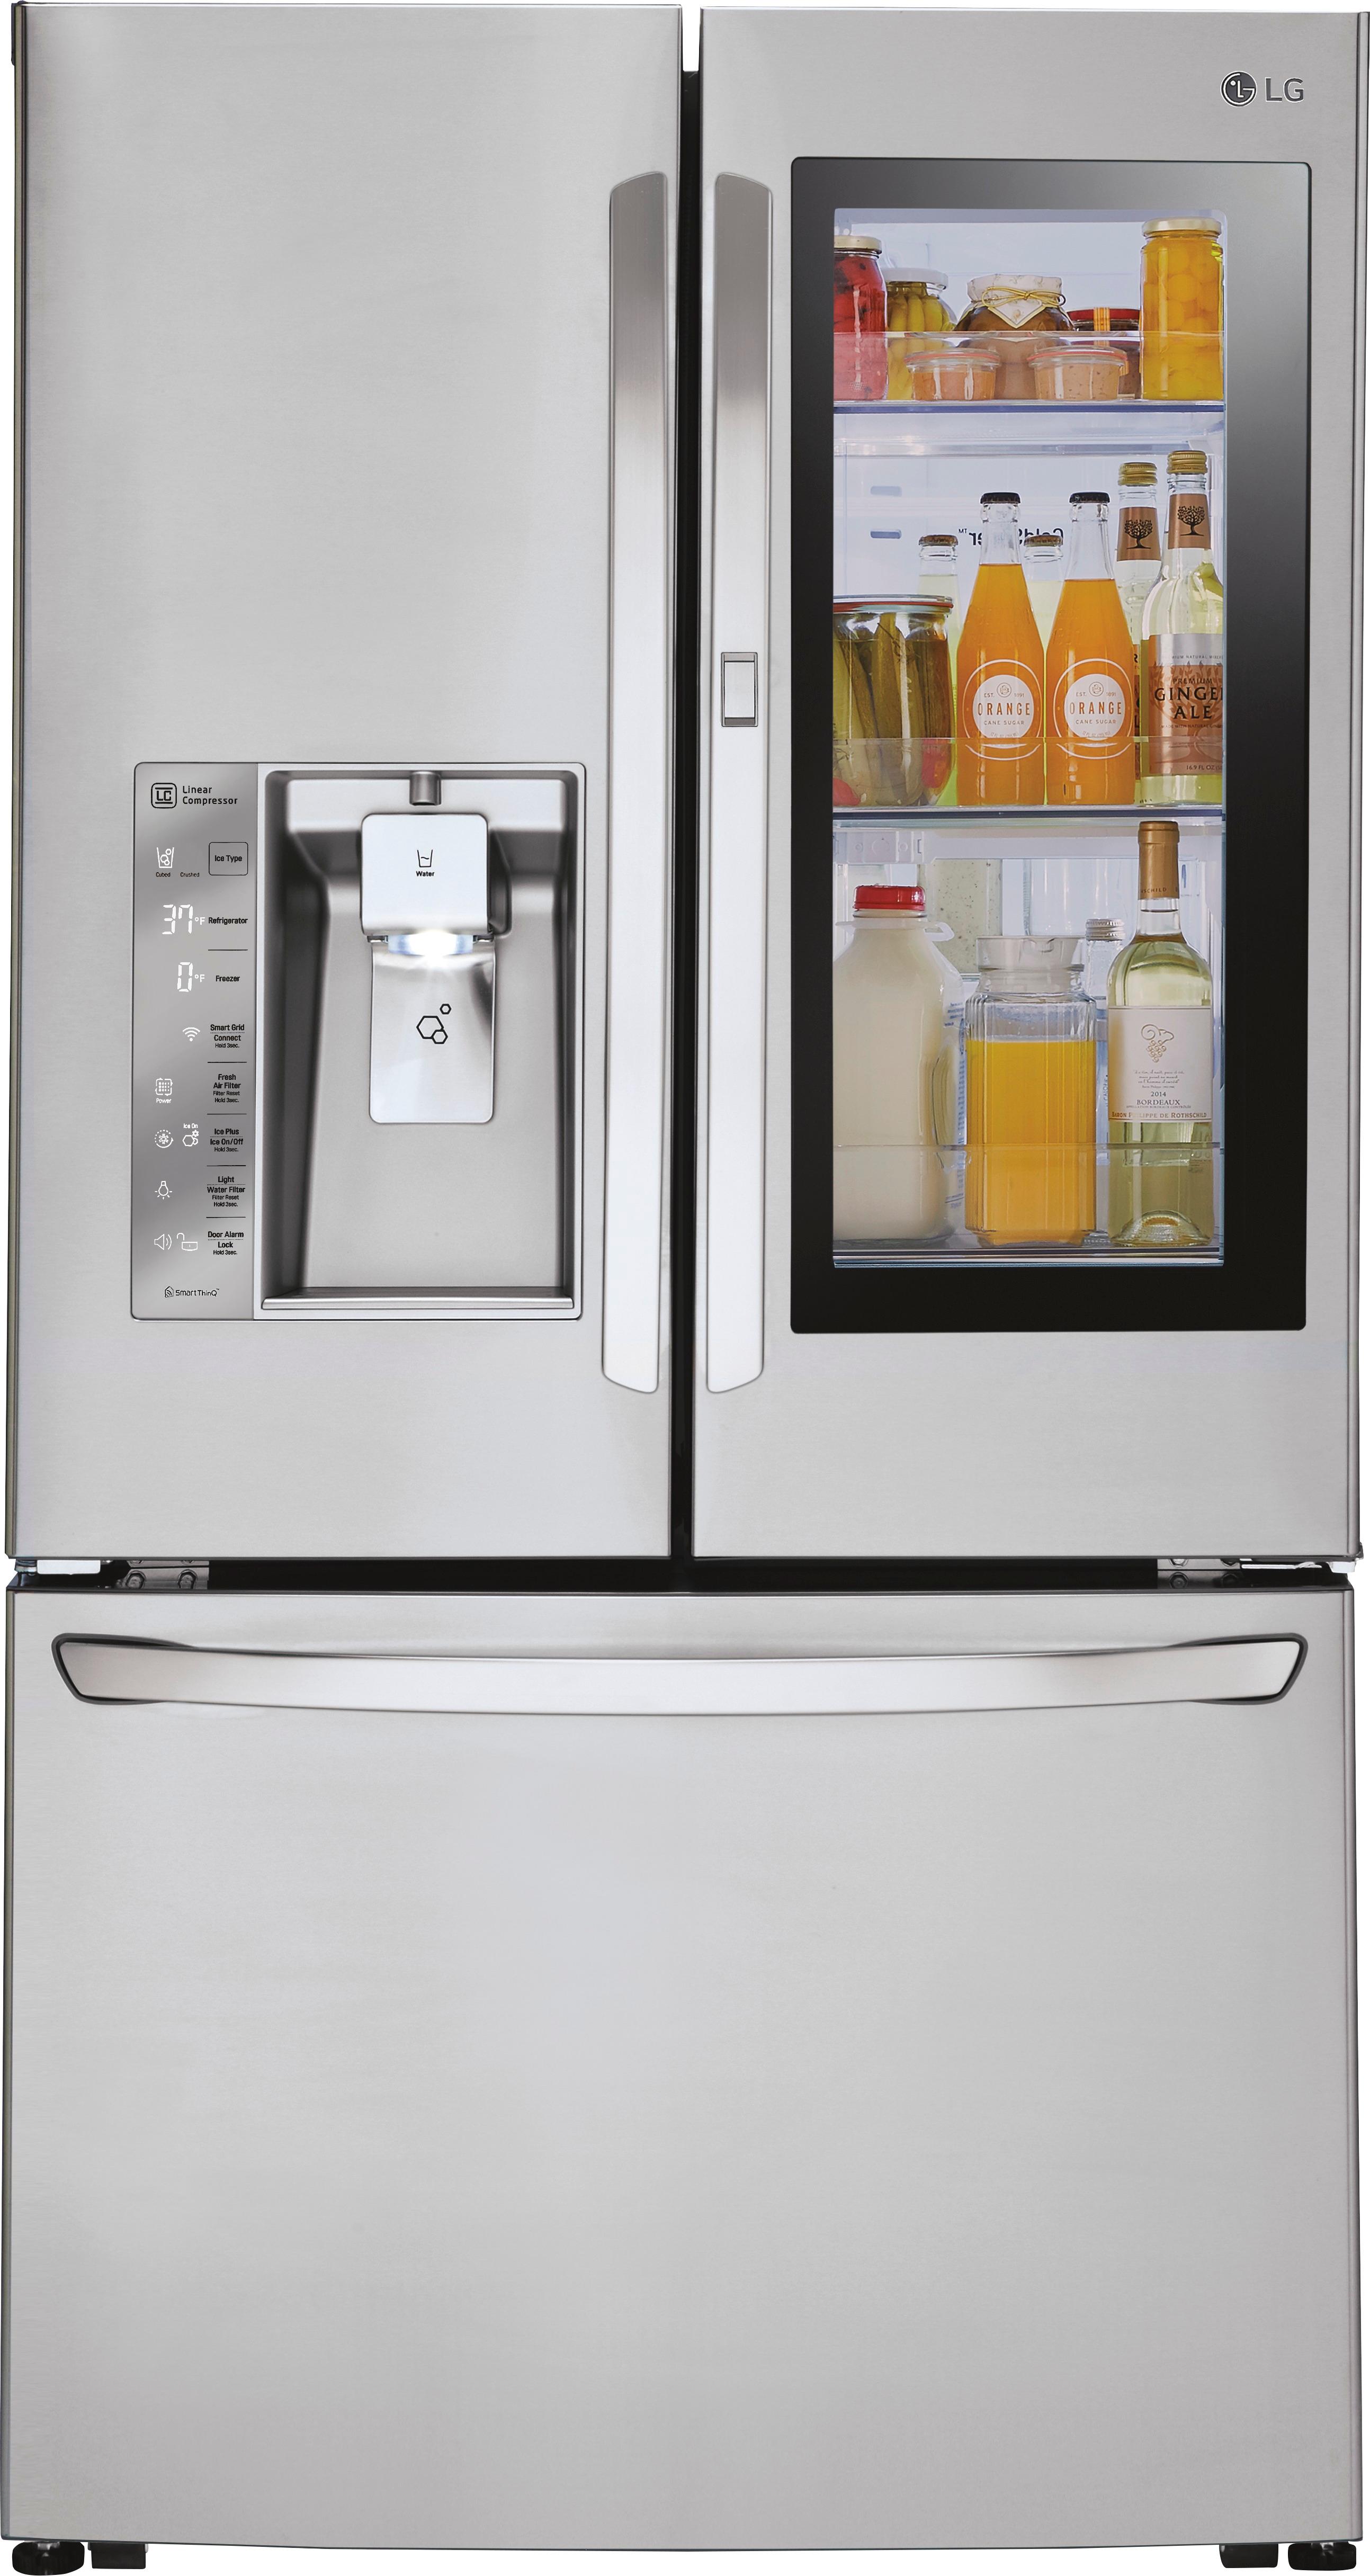 43+ Lg instaview refrigerator in stock ideas in 2021 